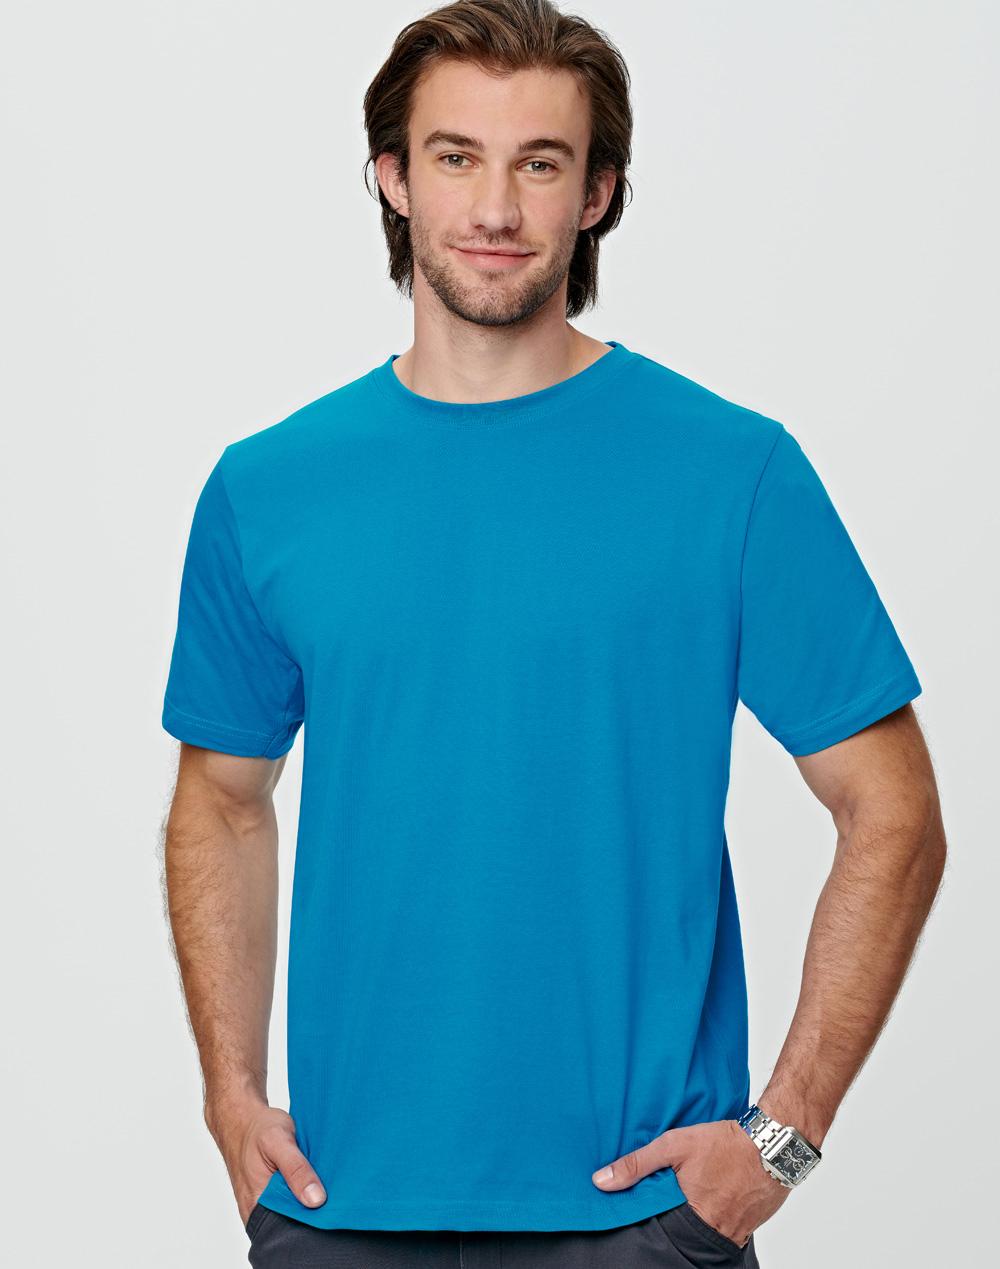 Customized Semi-Fitted T-Shirts Men's Online in Perh Australia